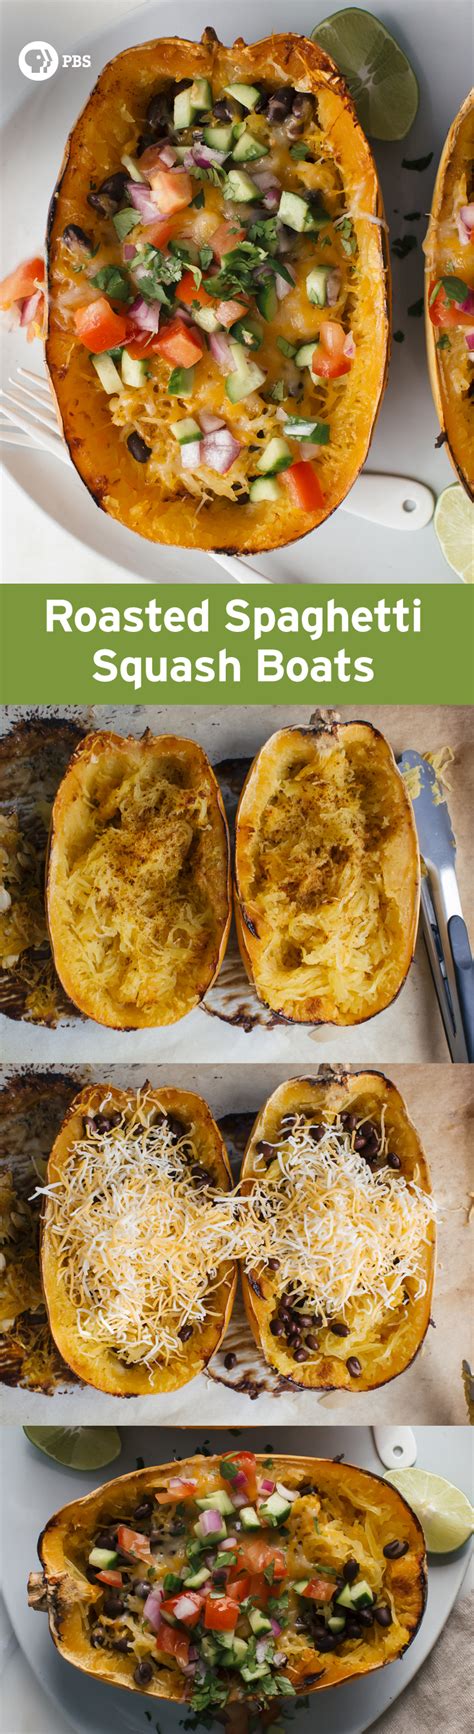 Roasted Spaghetti Squash Boats Recipe Fresh Tastes Blog Pbs Food